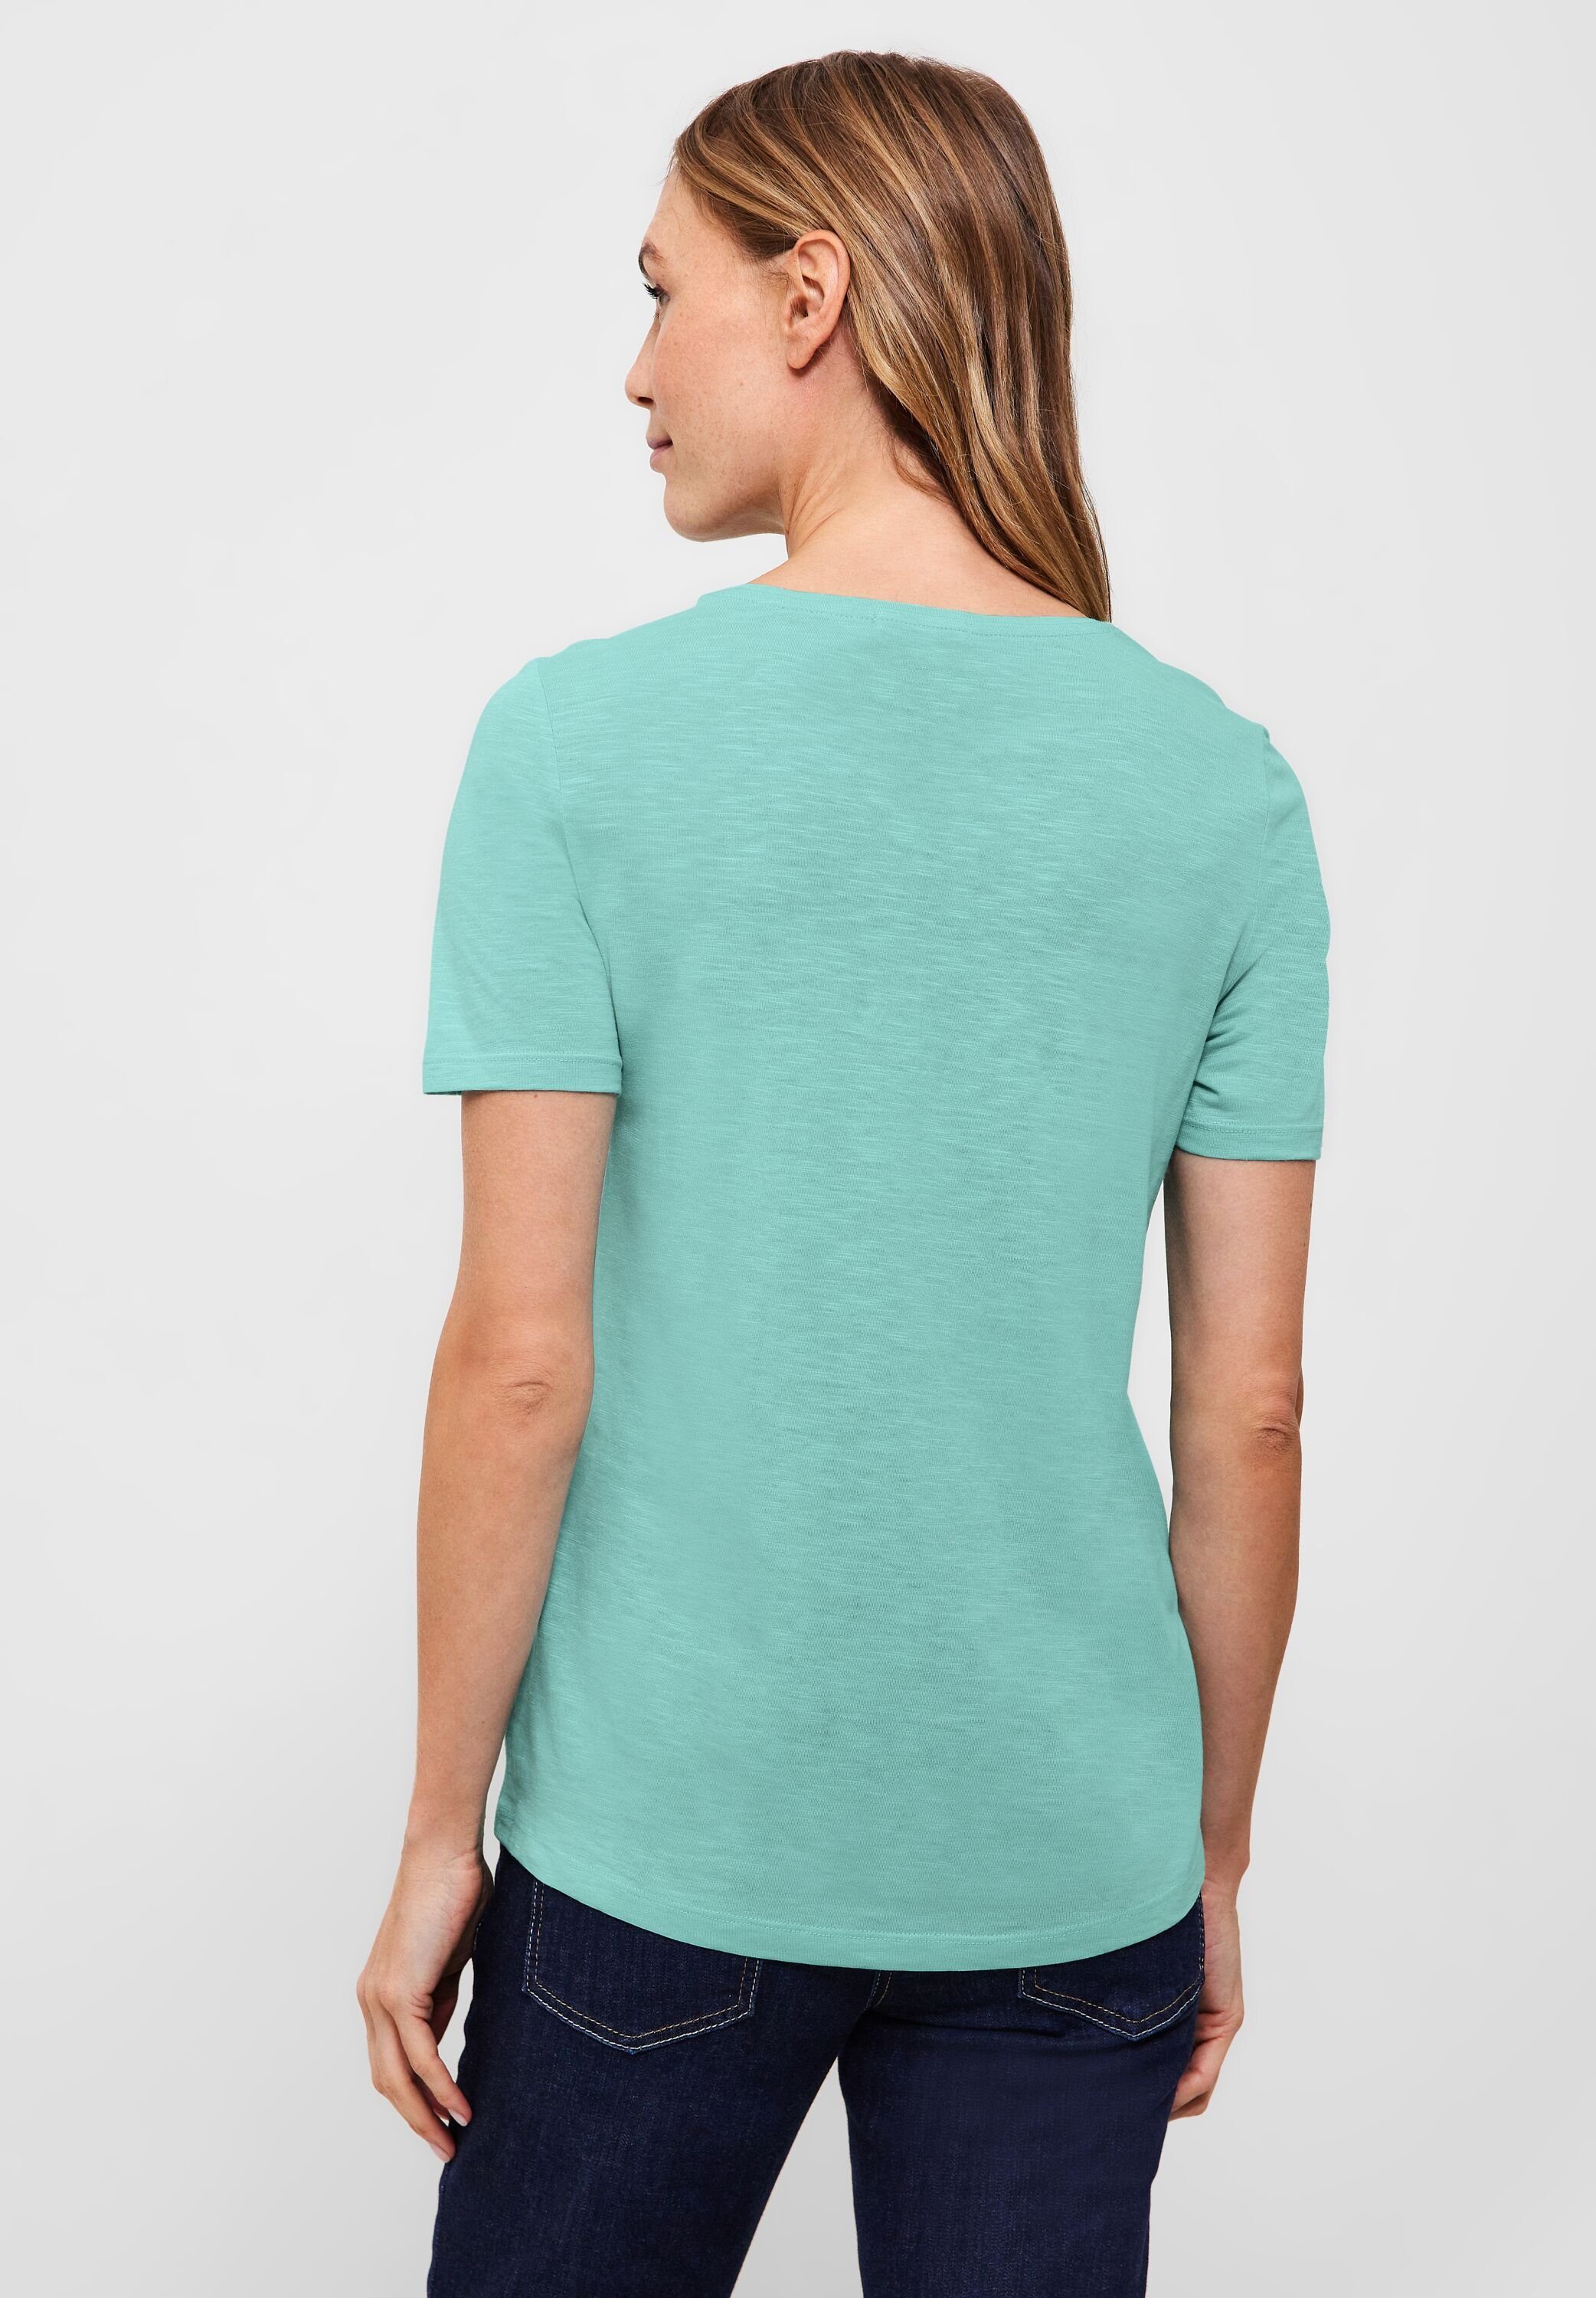 T-Shirt Baumwolle green aus cool reiner mint Cecil